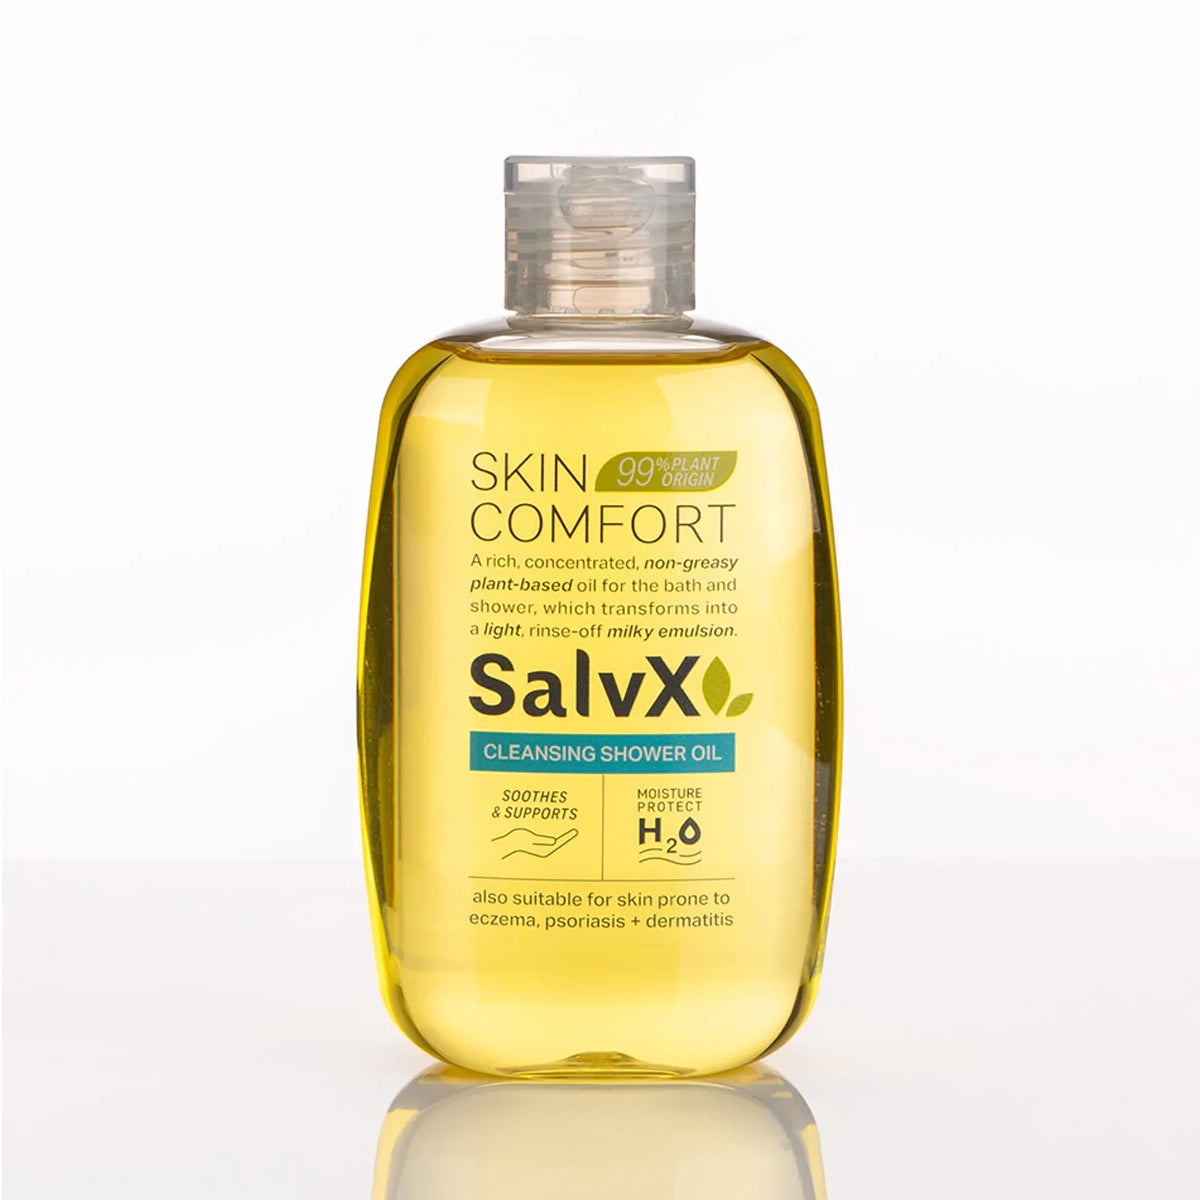 SALVX CLEANSING SHOWER OIL - 250ml